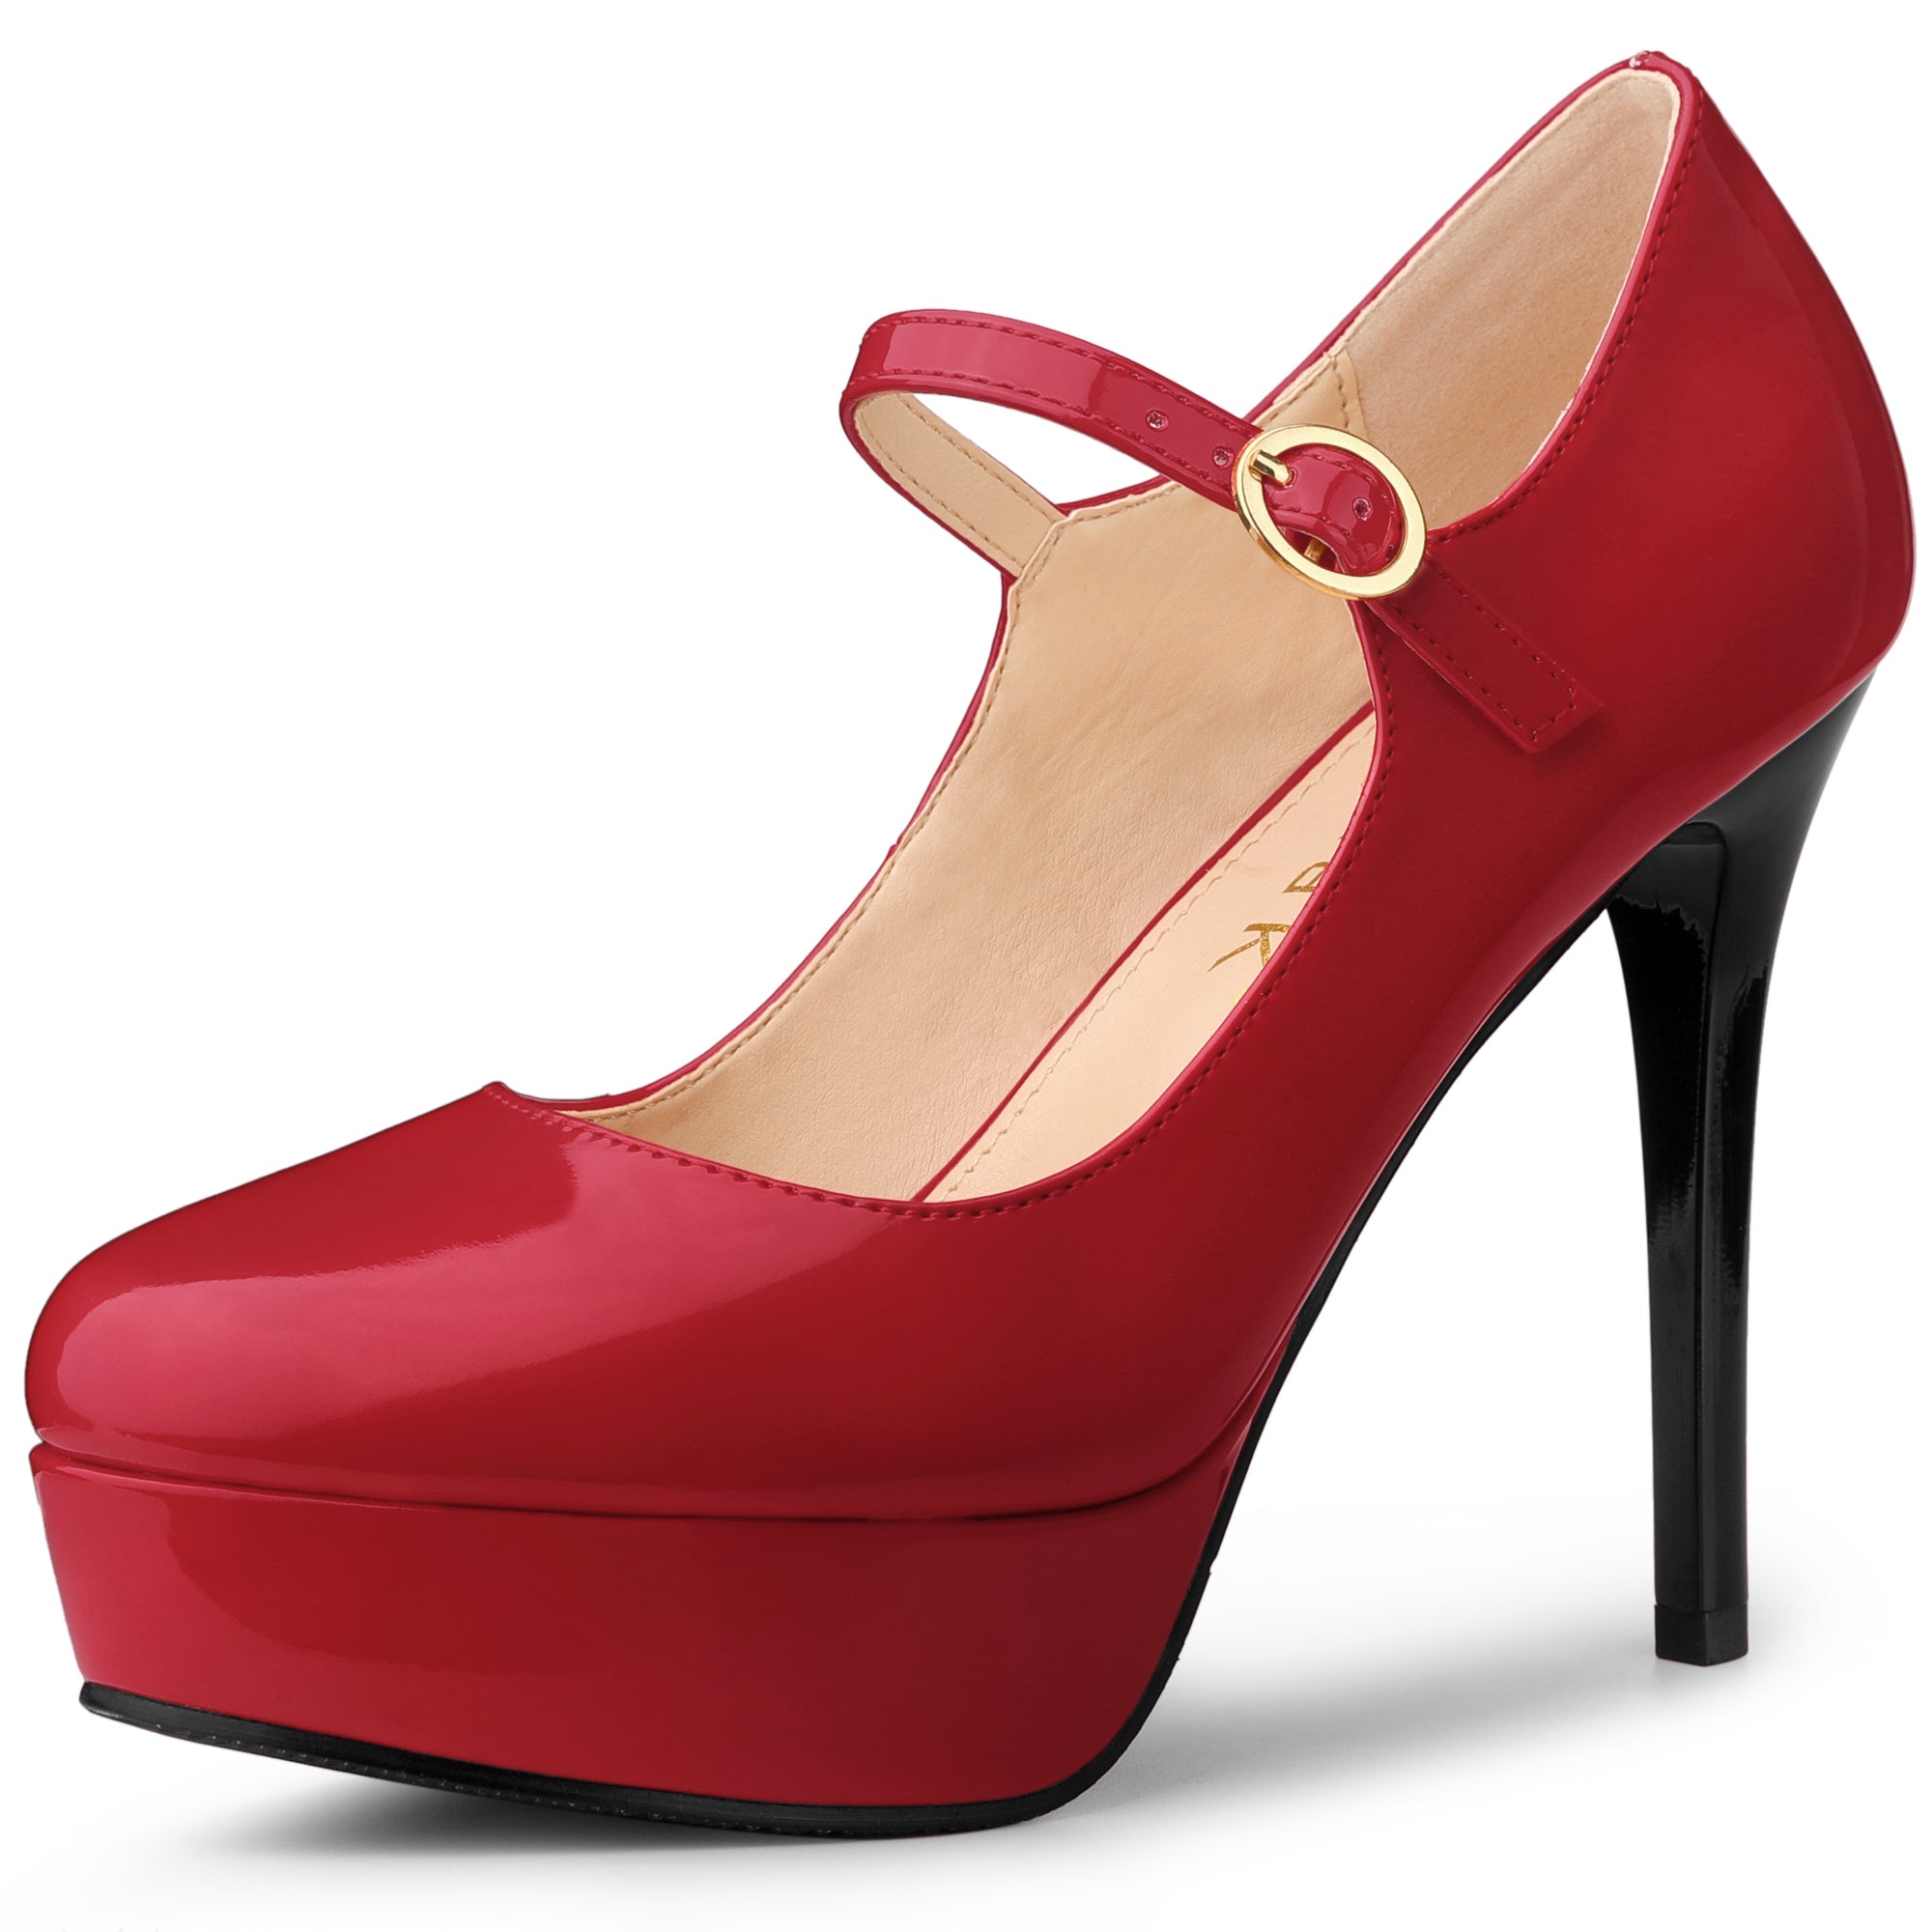 Allegra K Women's Pumps Round Toe High Stiletto Heels Ankle Strap Dress  Shoes 